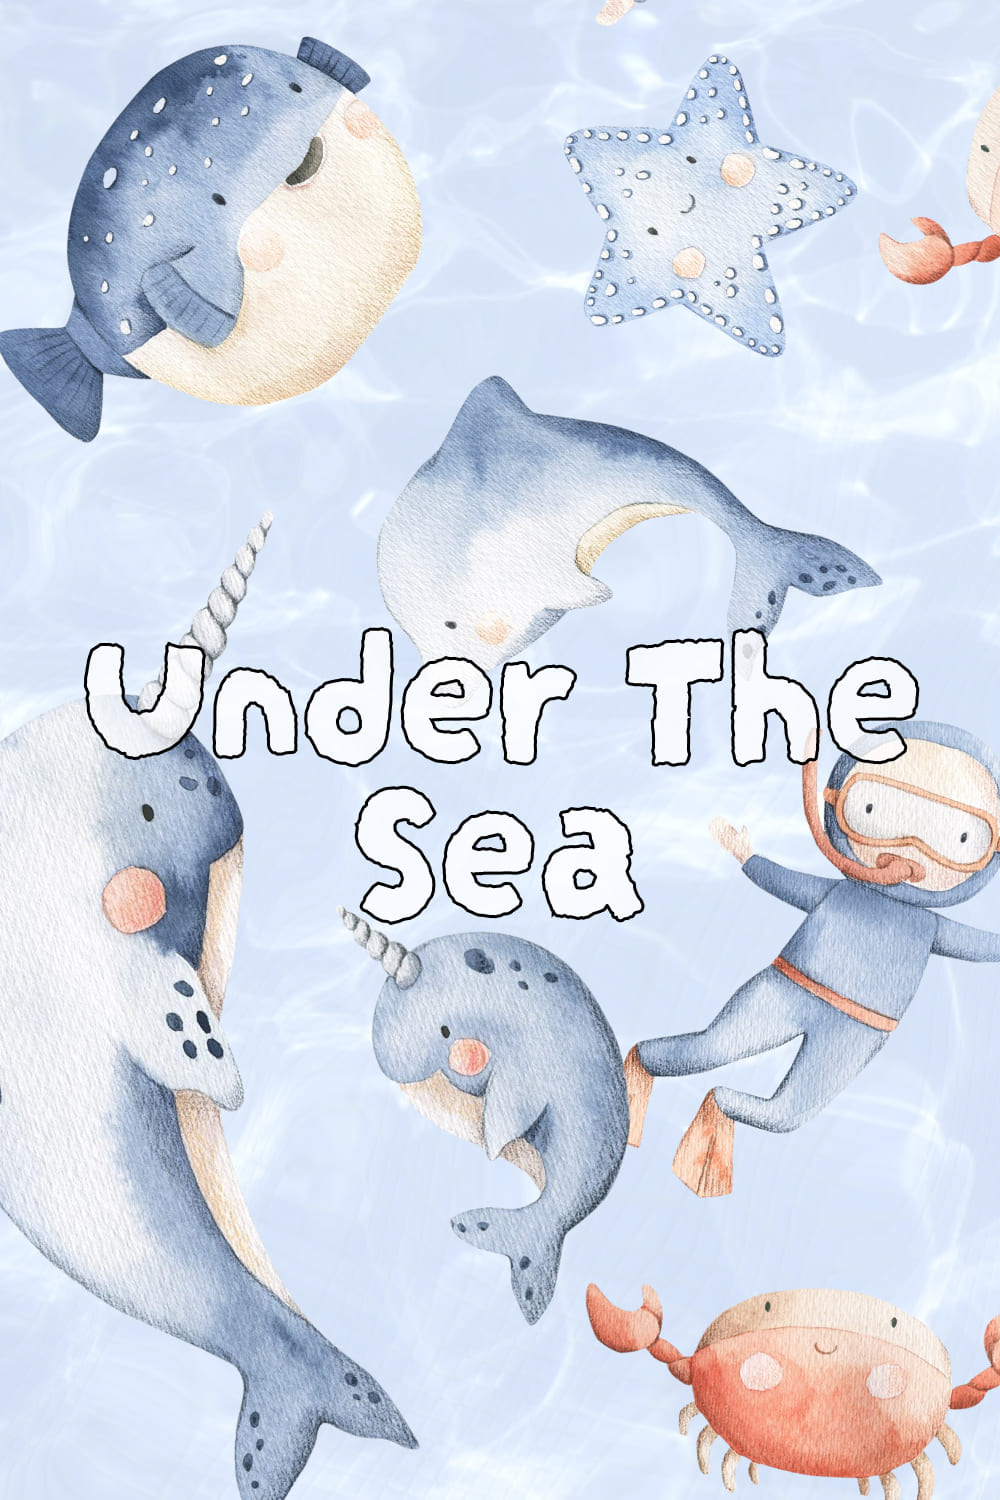 All under the sea habitants.